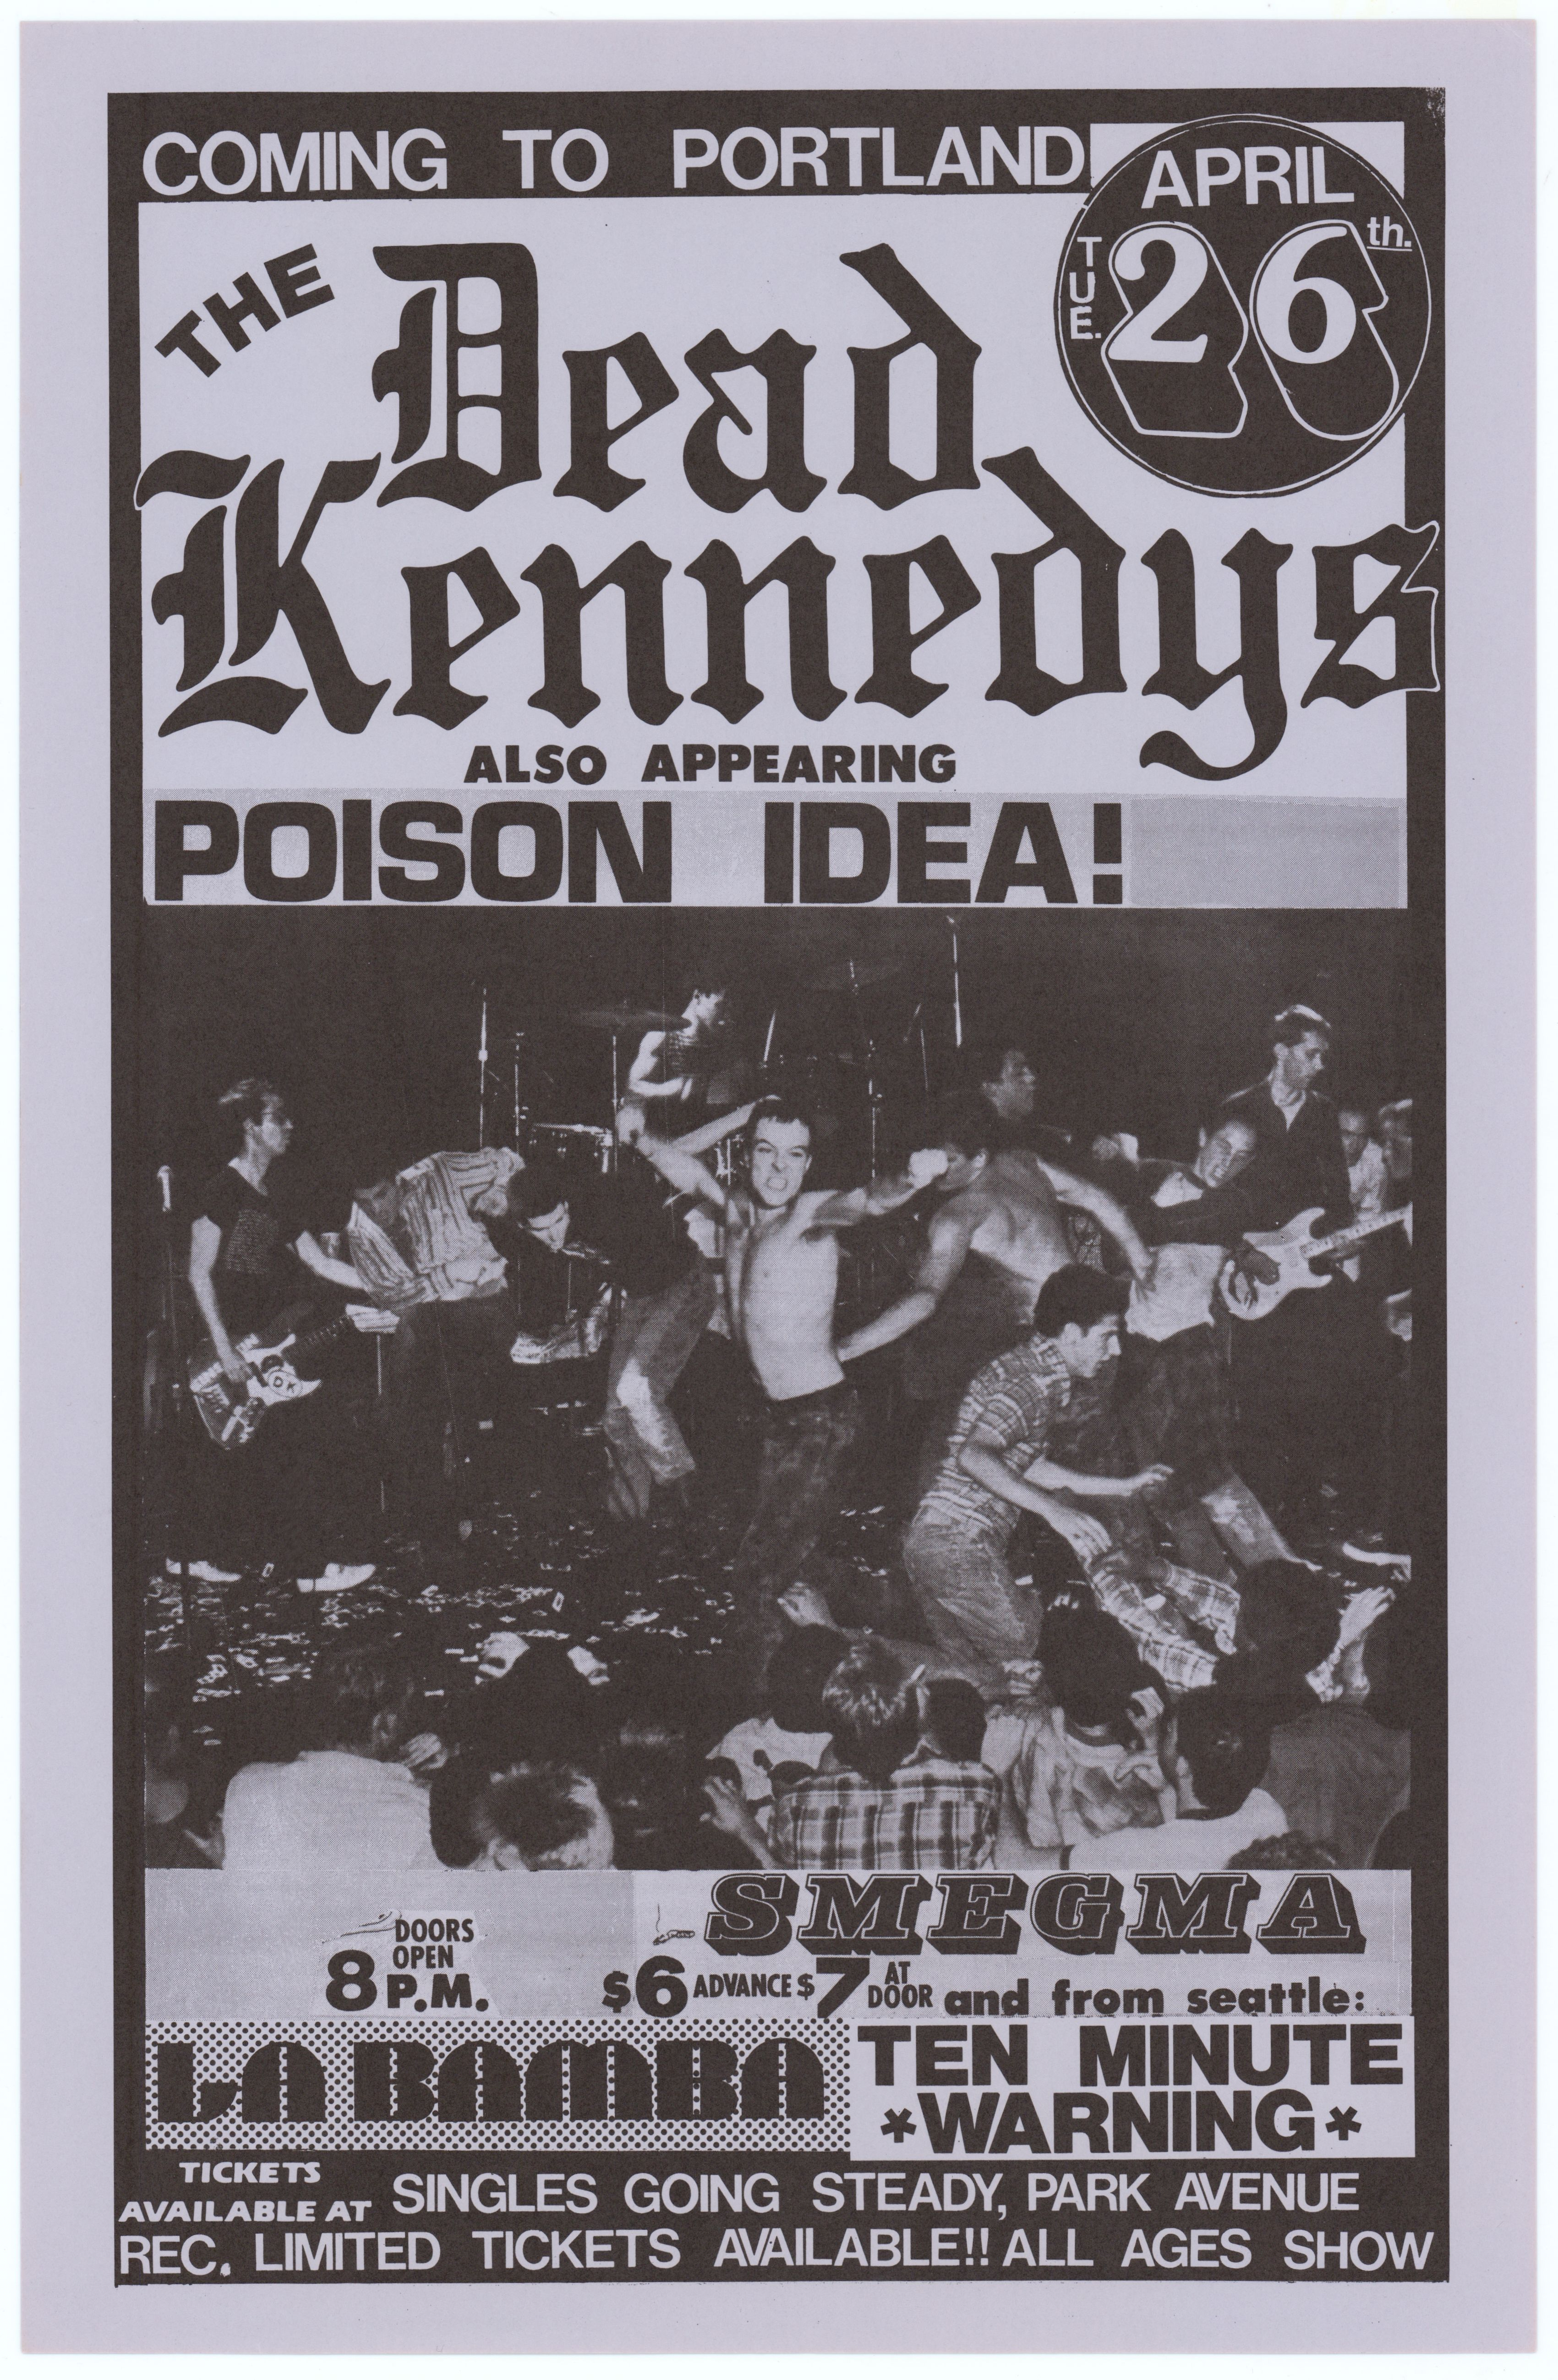 Dead Kennedys & Poison Idea La Bamba 1983 Concert Poster